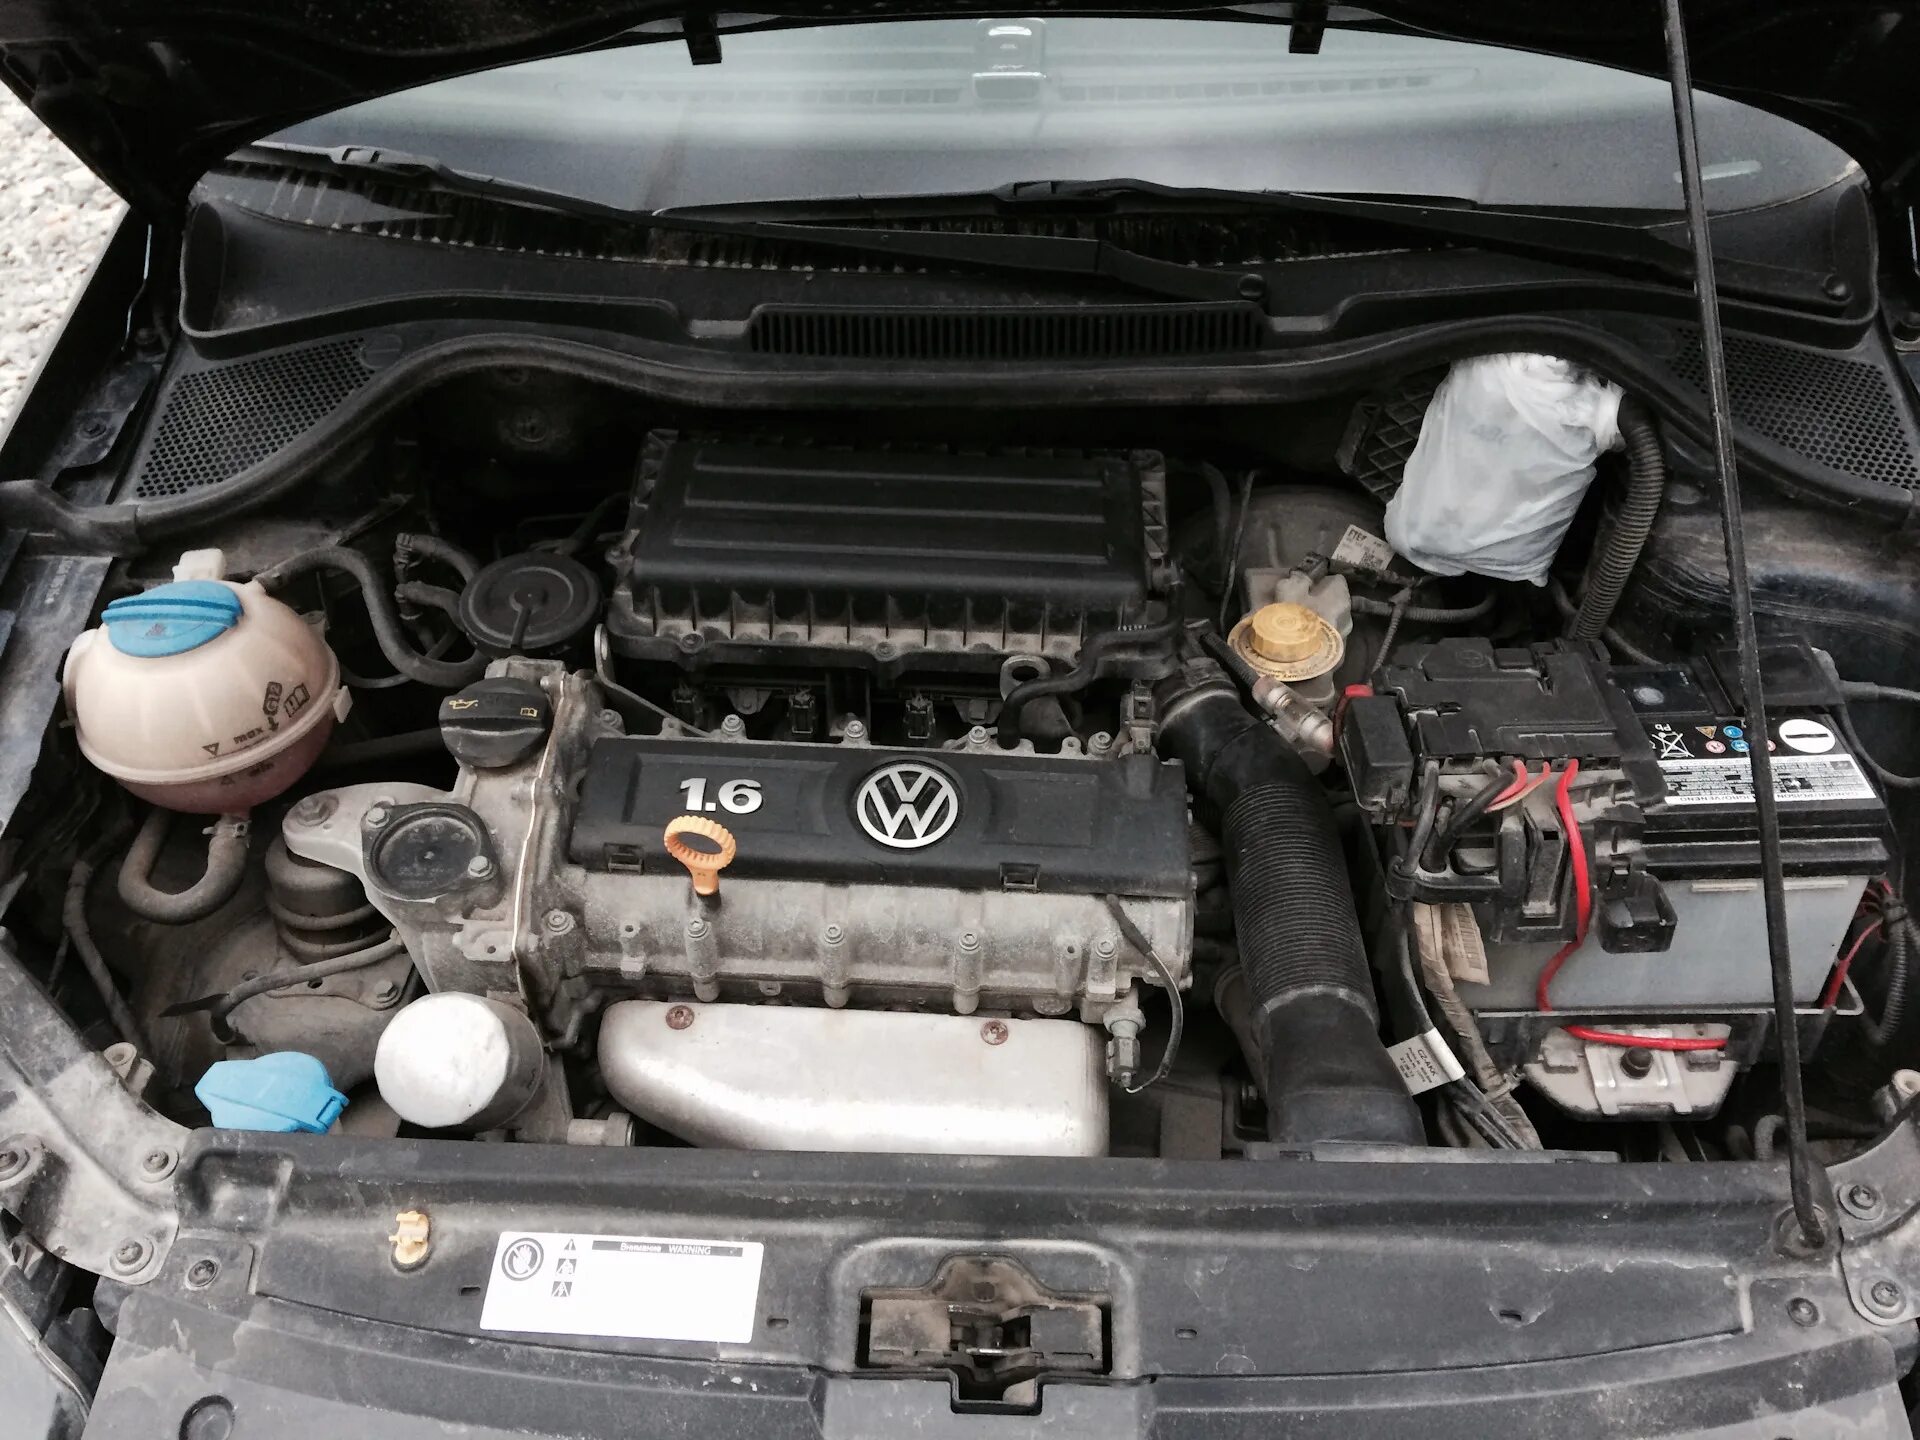 Volkswagen polo 1.6 двигателя. Мотор CFNA 1.6 VW. Мотор Фольксваген поло седан 1.6. Двигатель Фольксваген поло седан 1.6. Двигатель поло седан 1.6 CFNA.